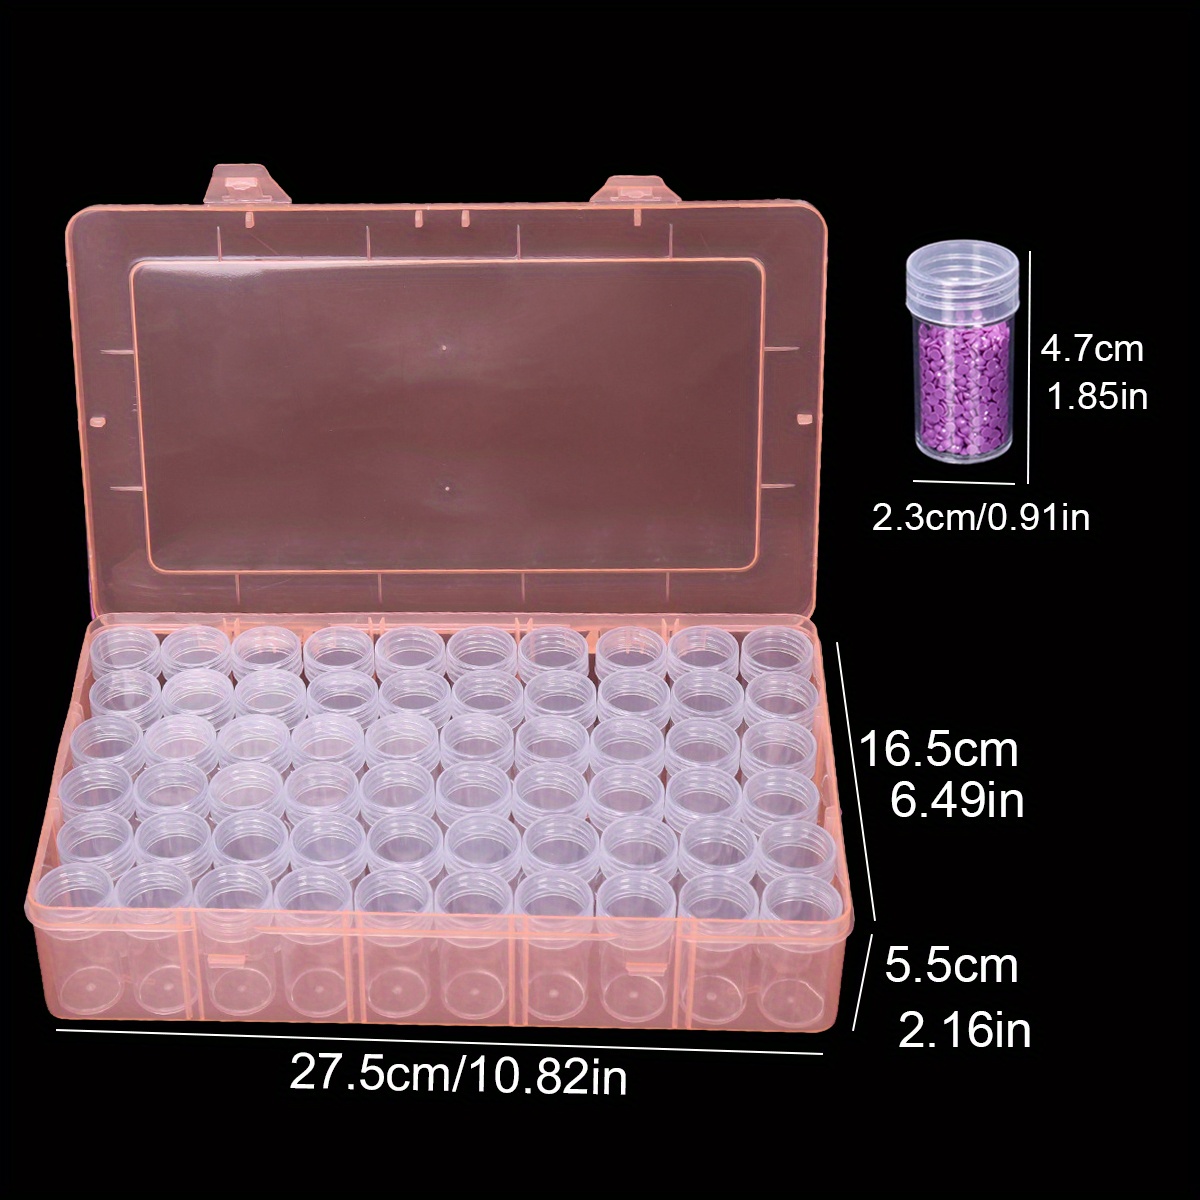 60 Slots Diamond Painting Accessories Storage Box Nail Art Embroidery Case  Kit